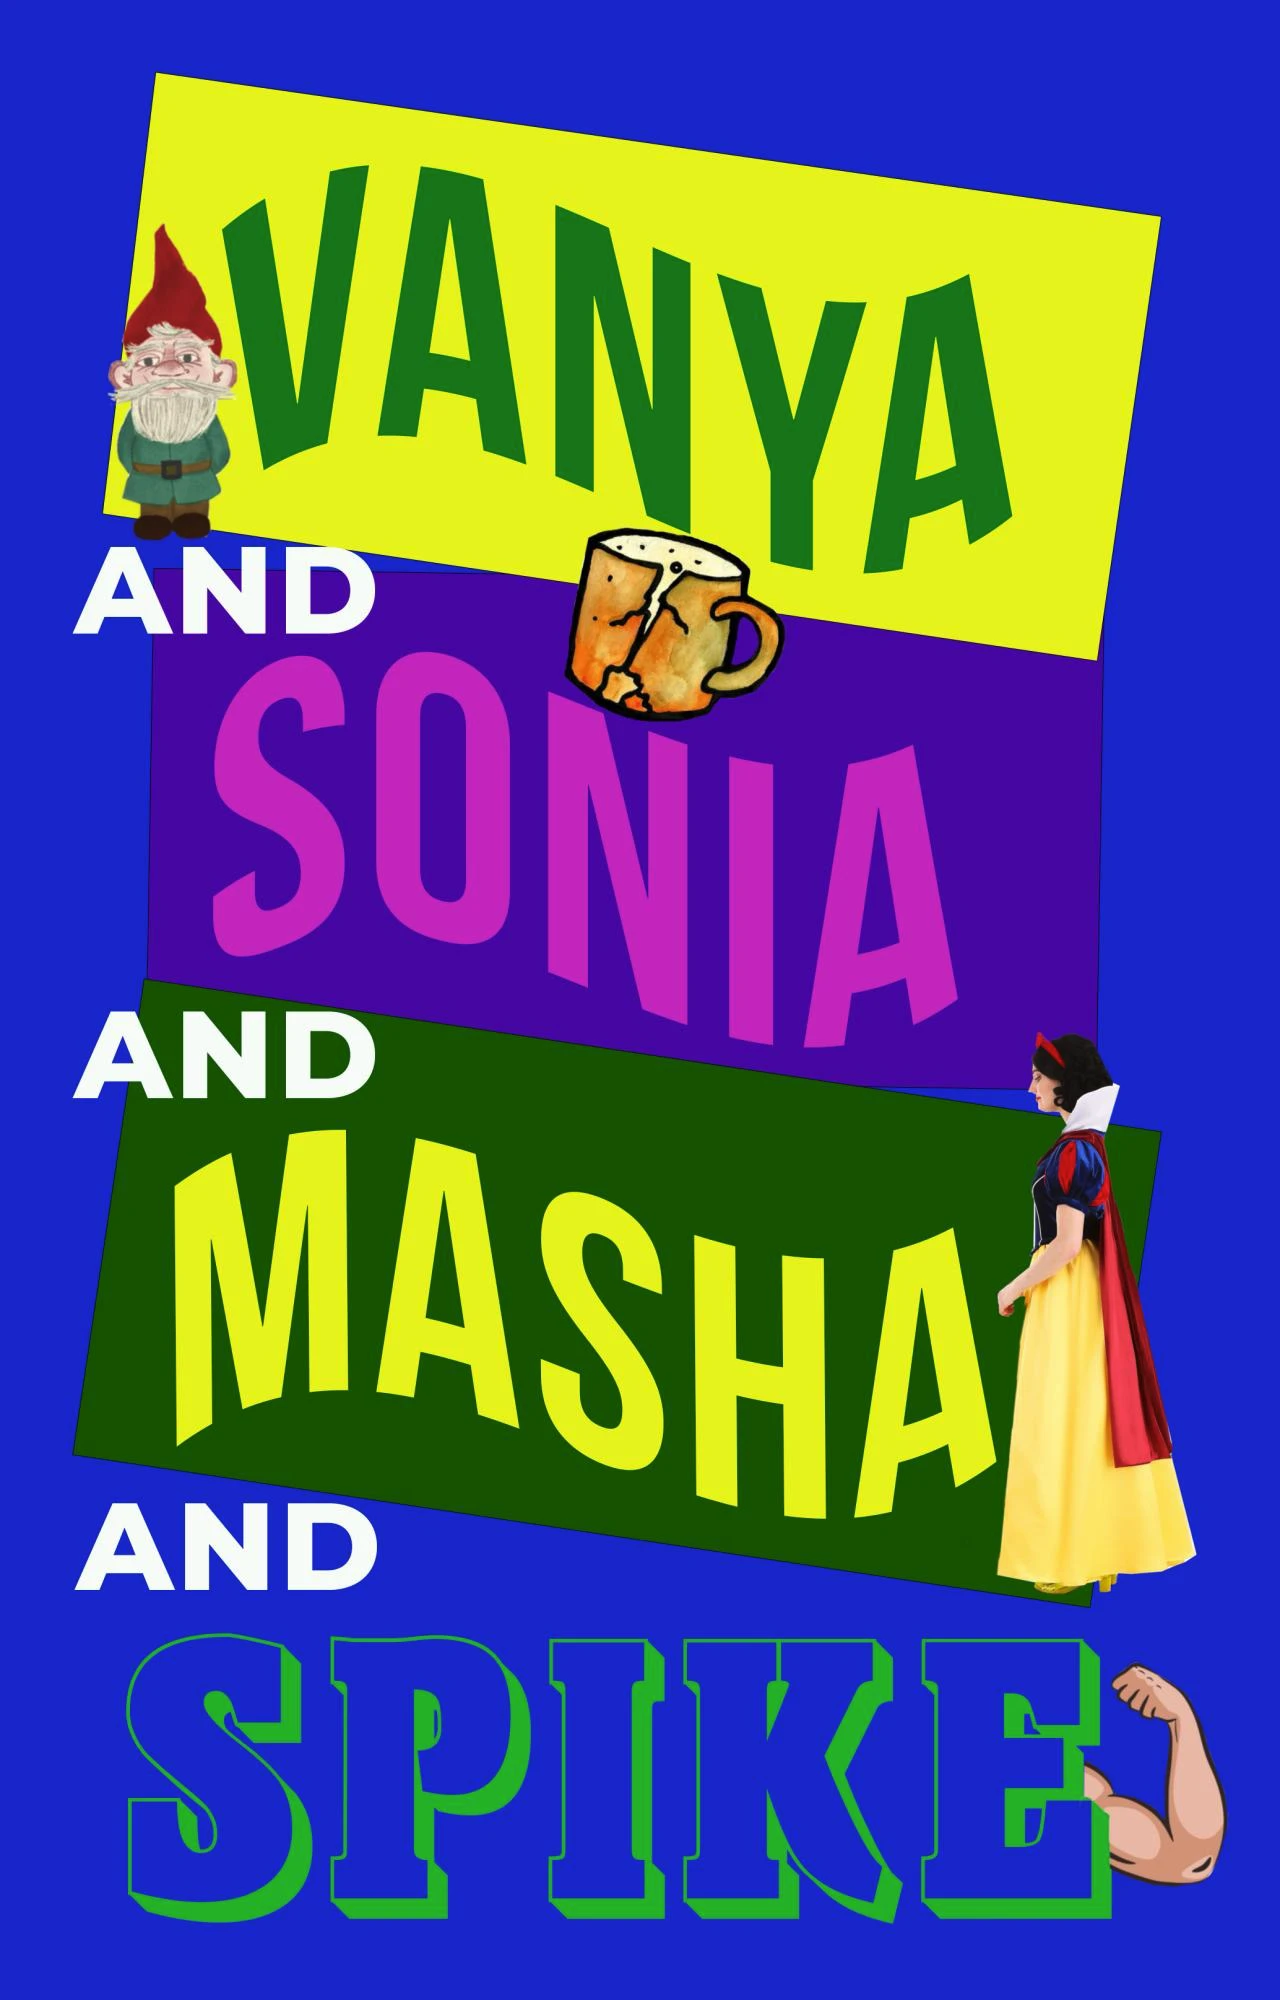 image from Vanya and Sonia and Masha and Spike